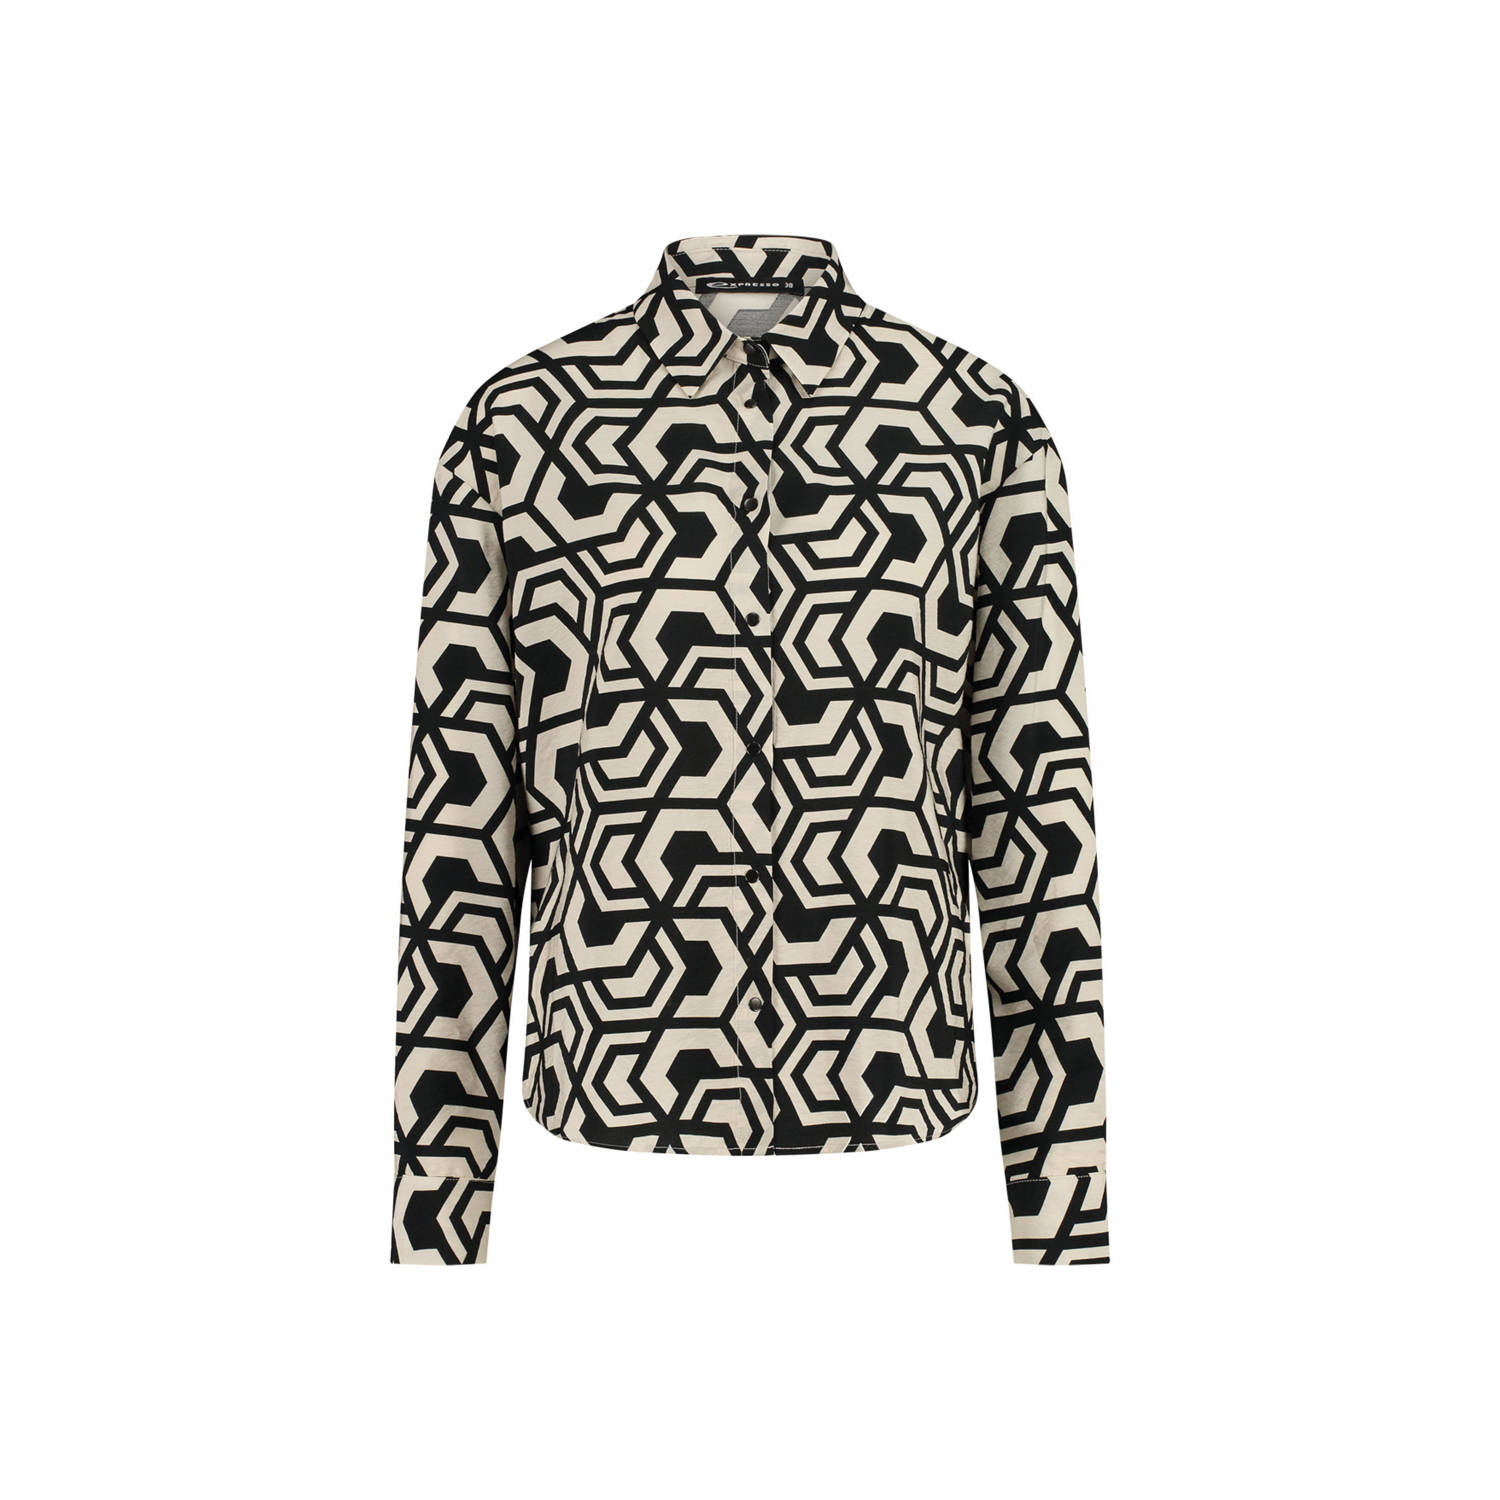 Expresso geweven blouse met grafische print zwart ecru